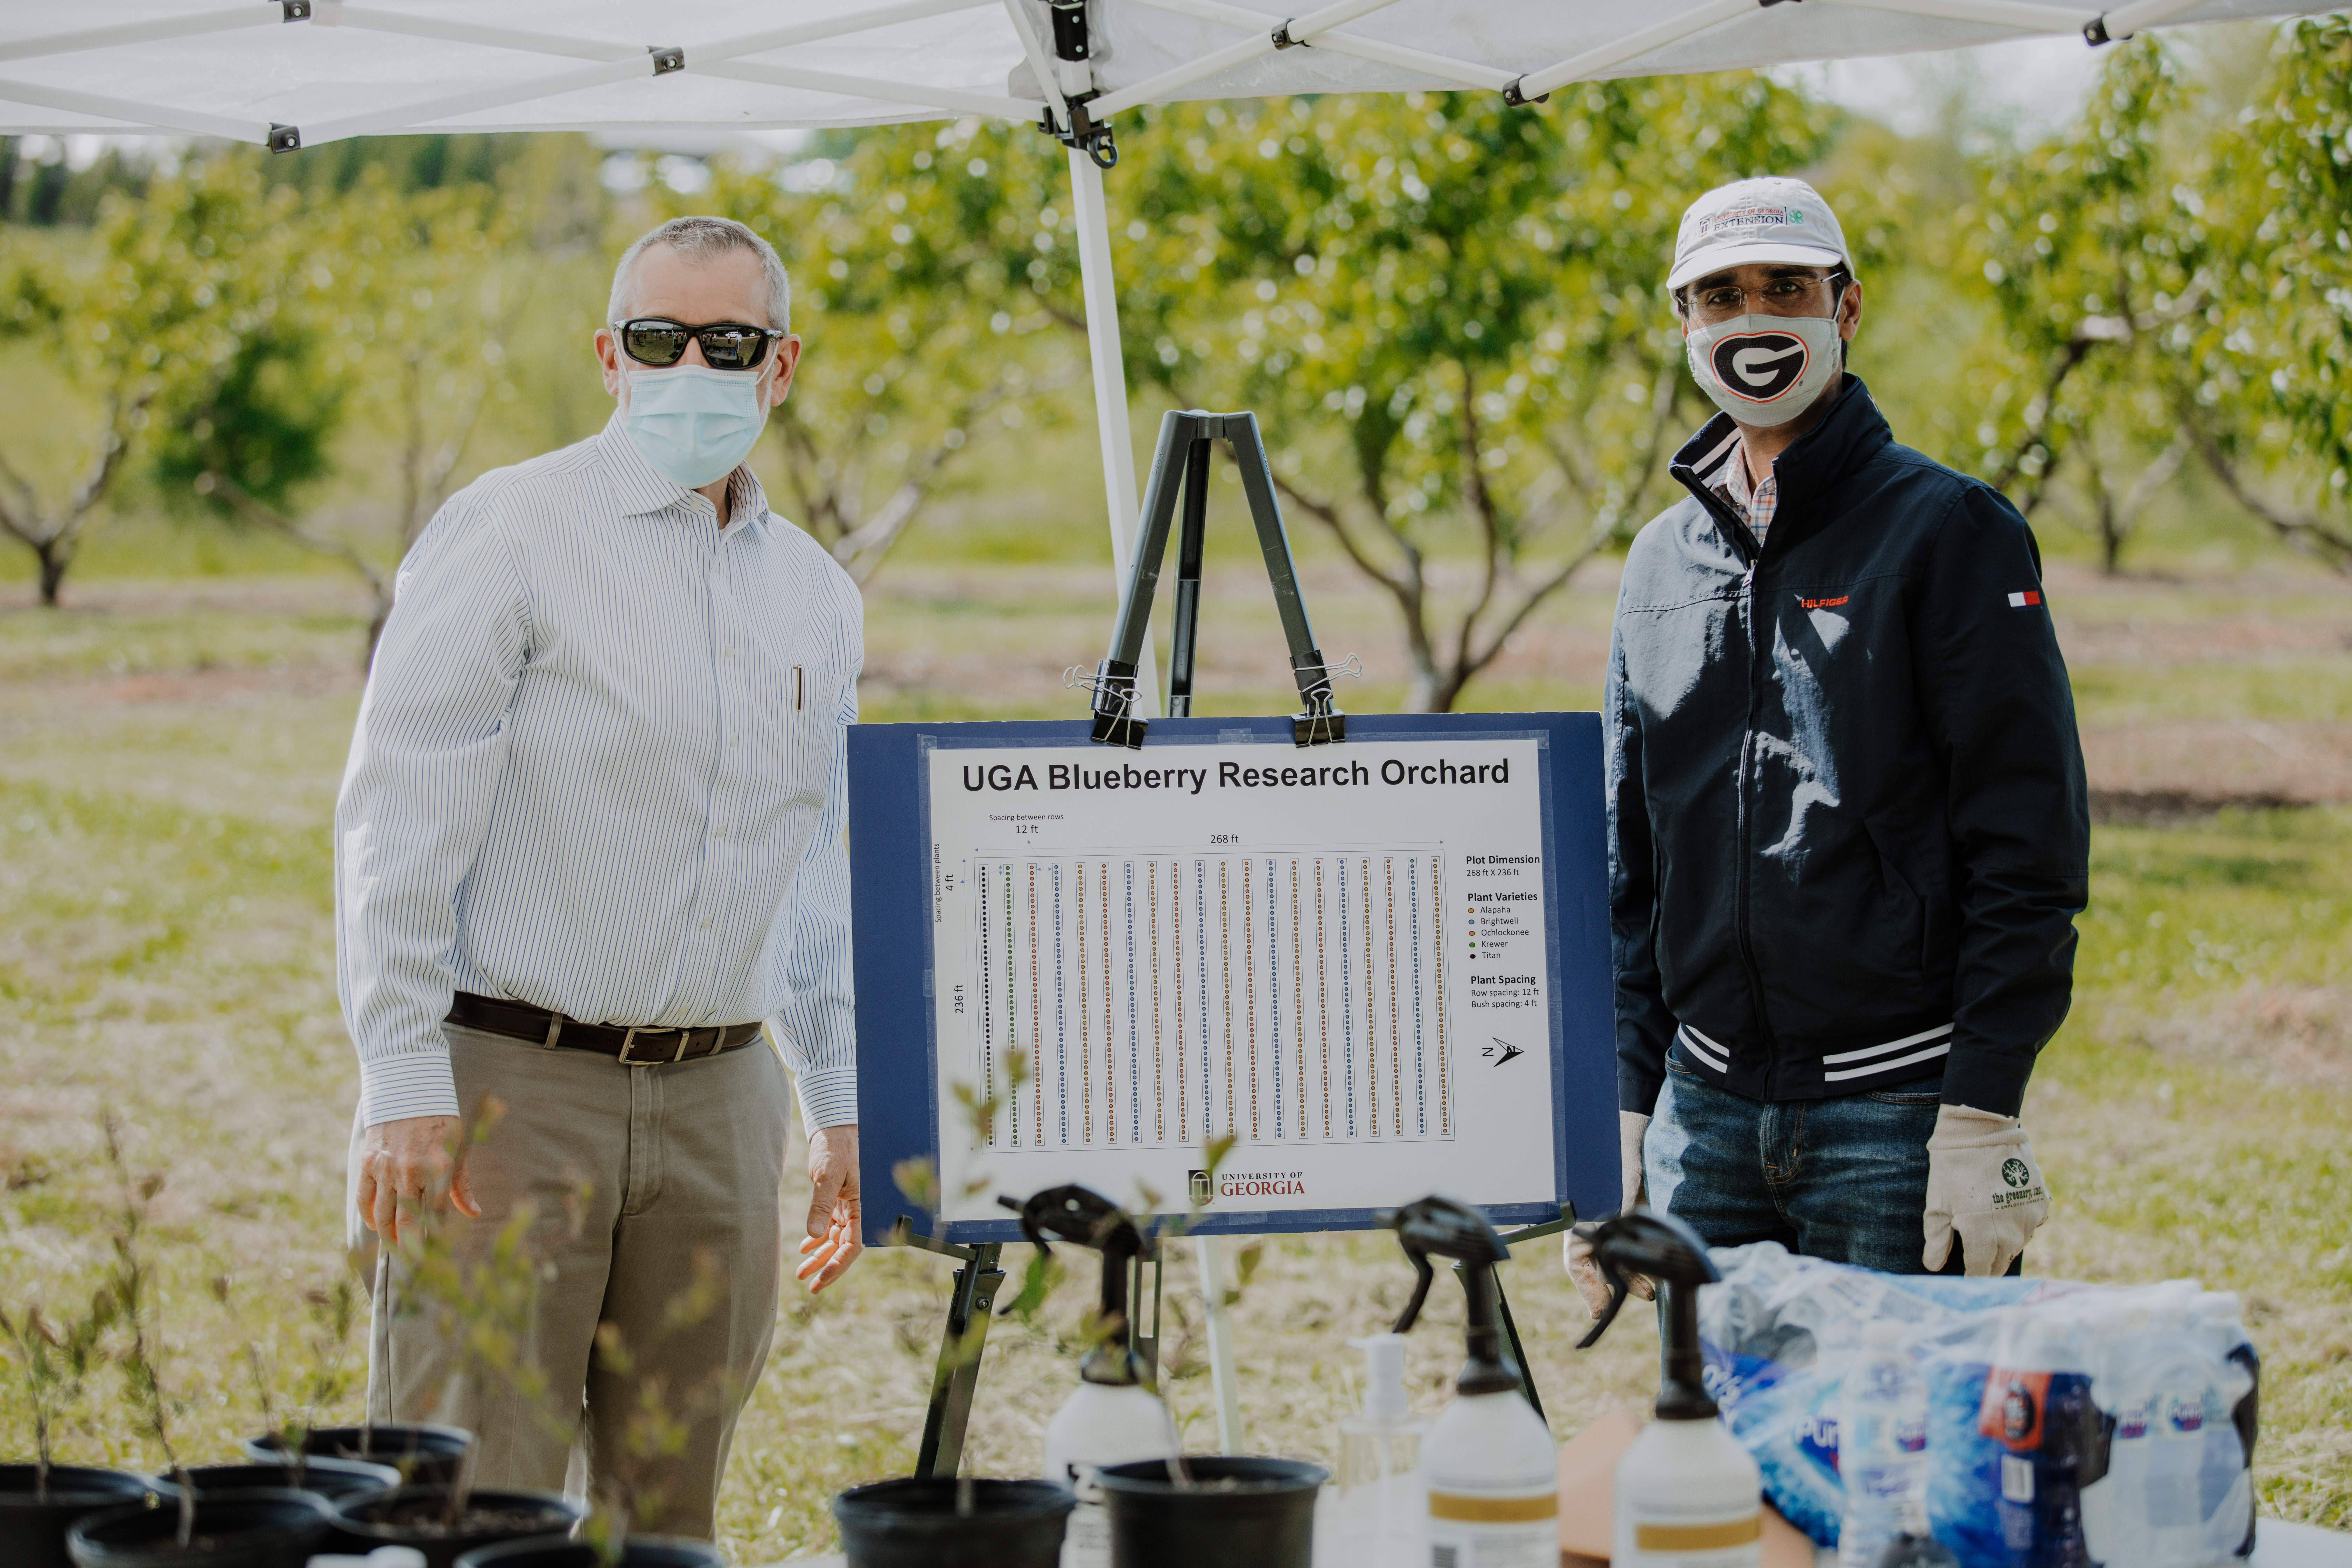 CAES院长兼主任Nick Place(左)和佐治亚大学蓝莓昆虫学家Ashfaq Sial概述了新的蓝莓研究区布局，列出了佐治亚大学在佐治亚州沃特金斯维尔的Durham园艺农场开发的蓝莓品种。